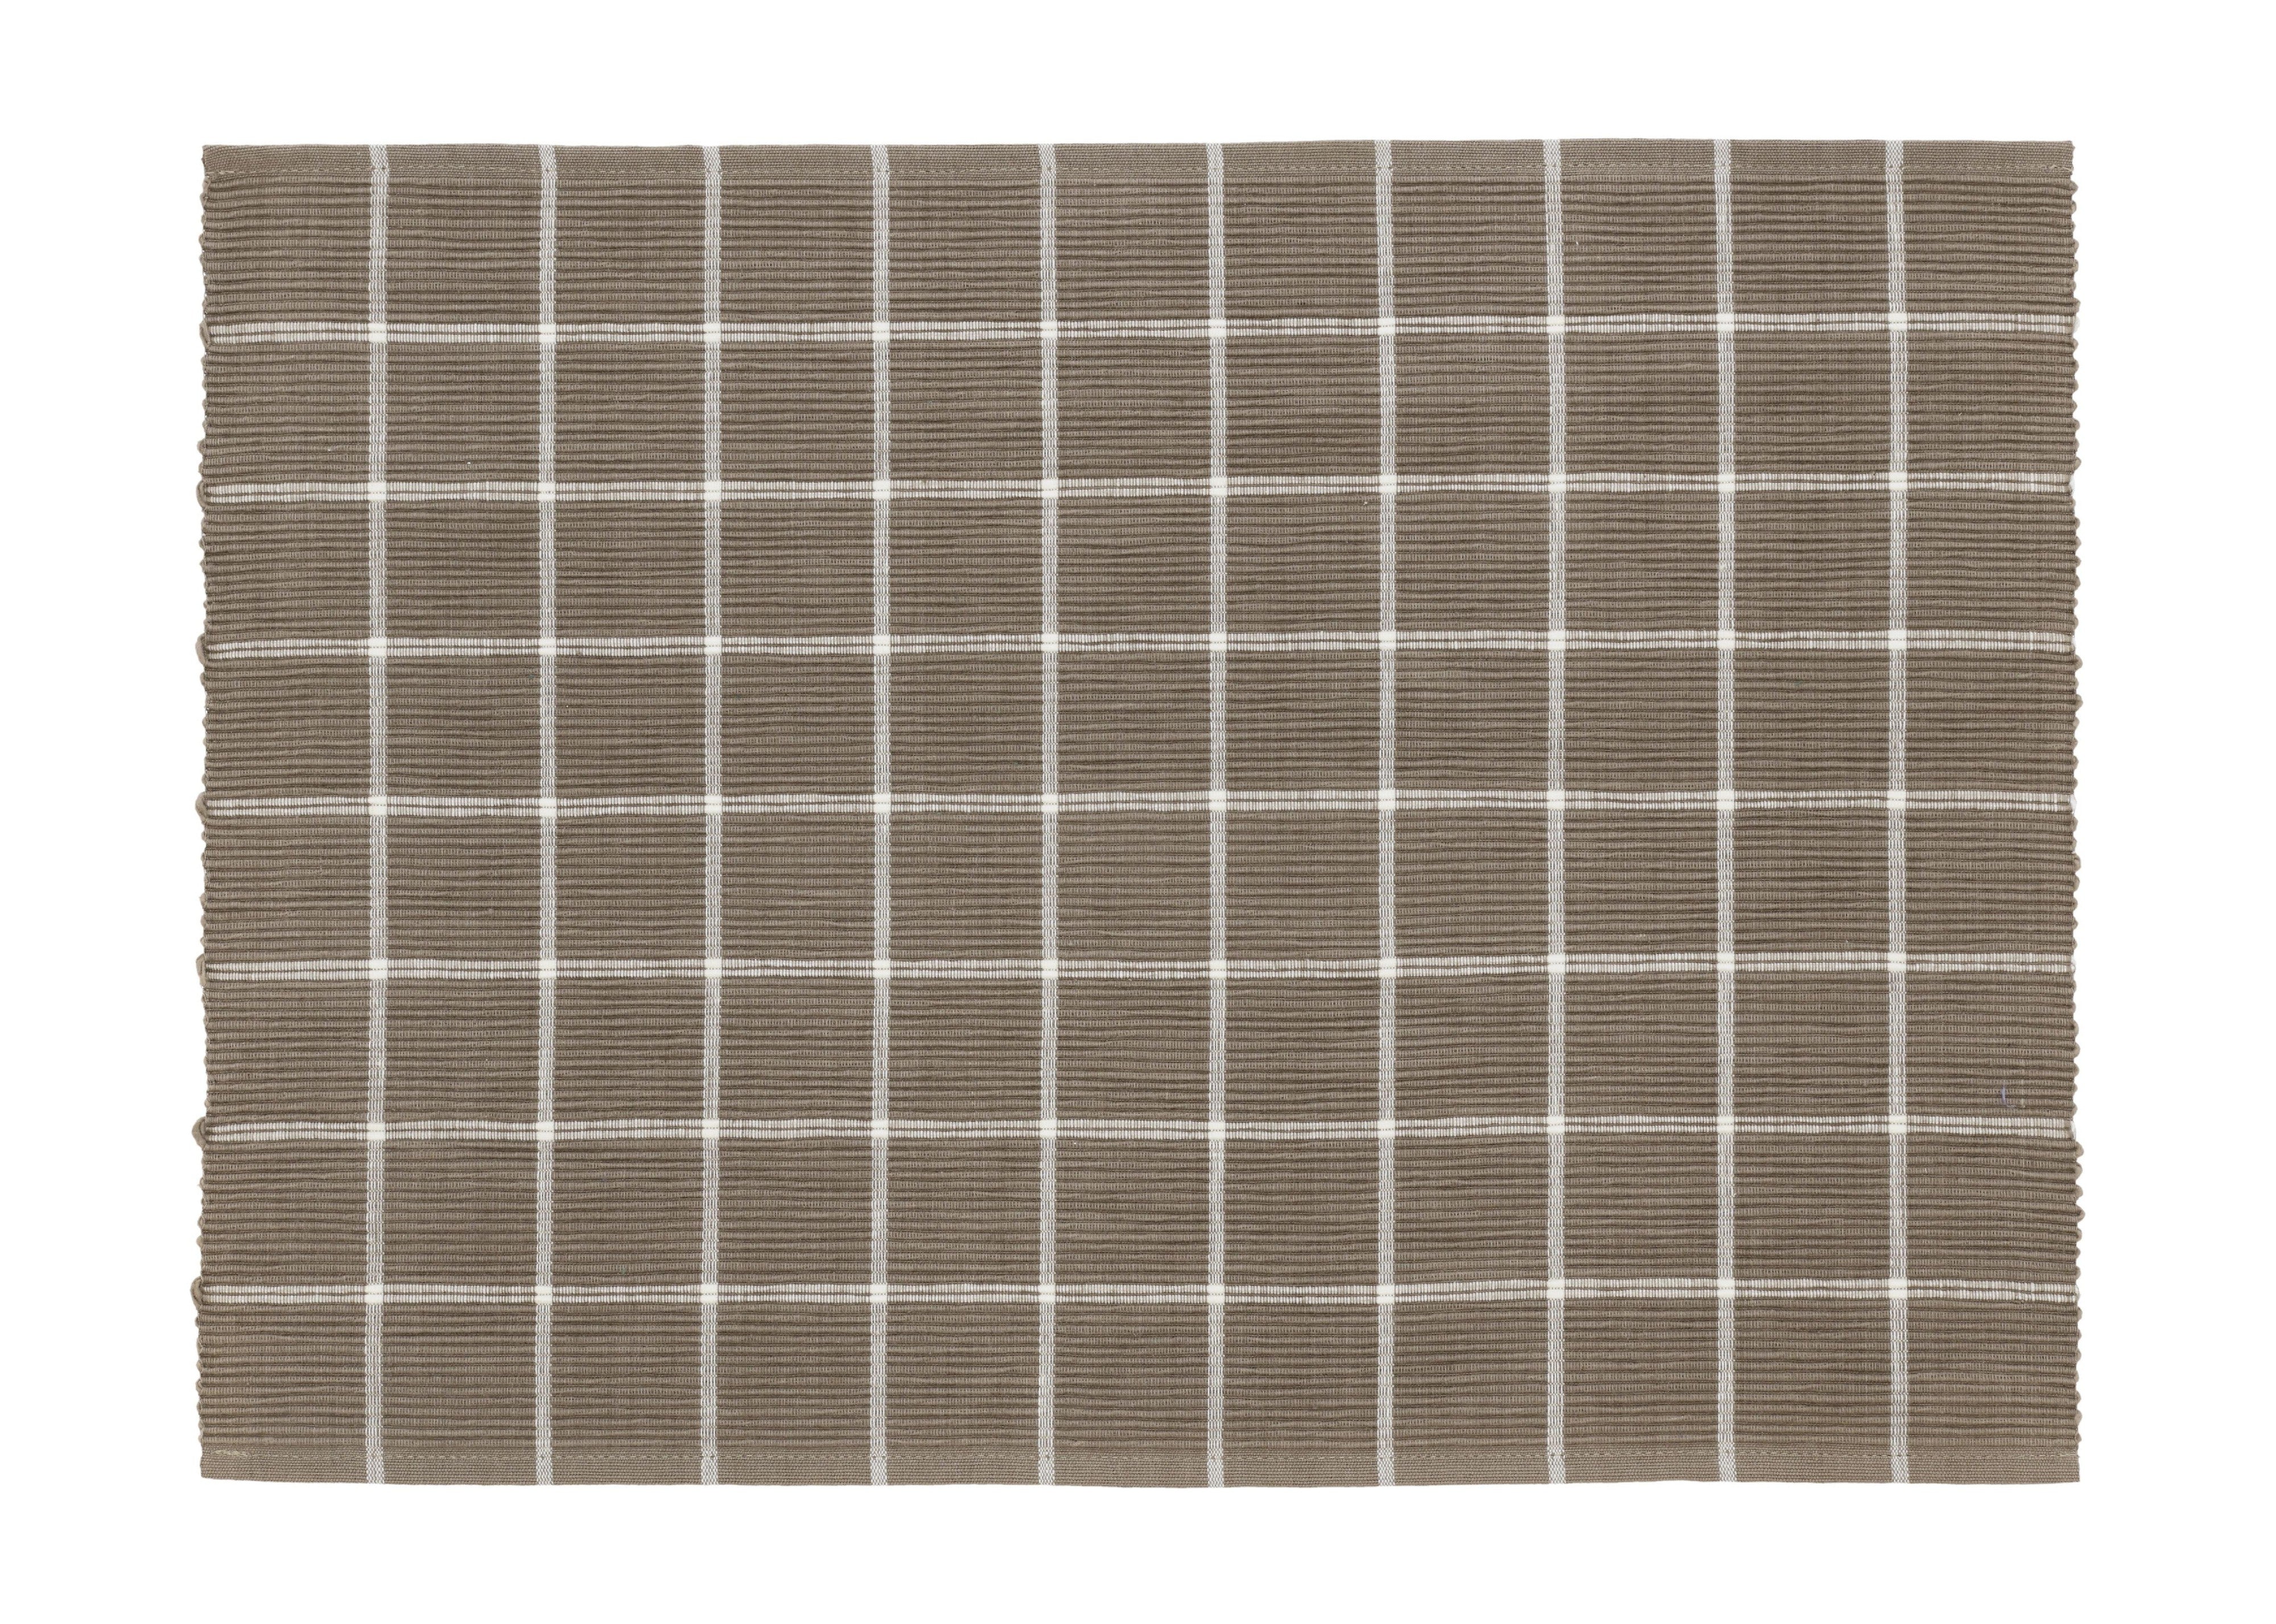 SödahlVistaplacemat 33 x 48厘米，灰褐色